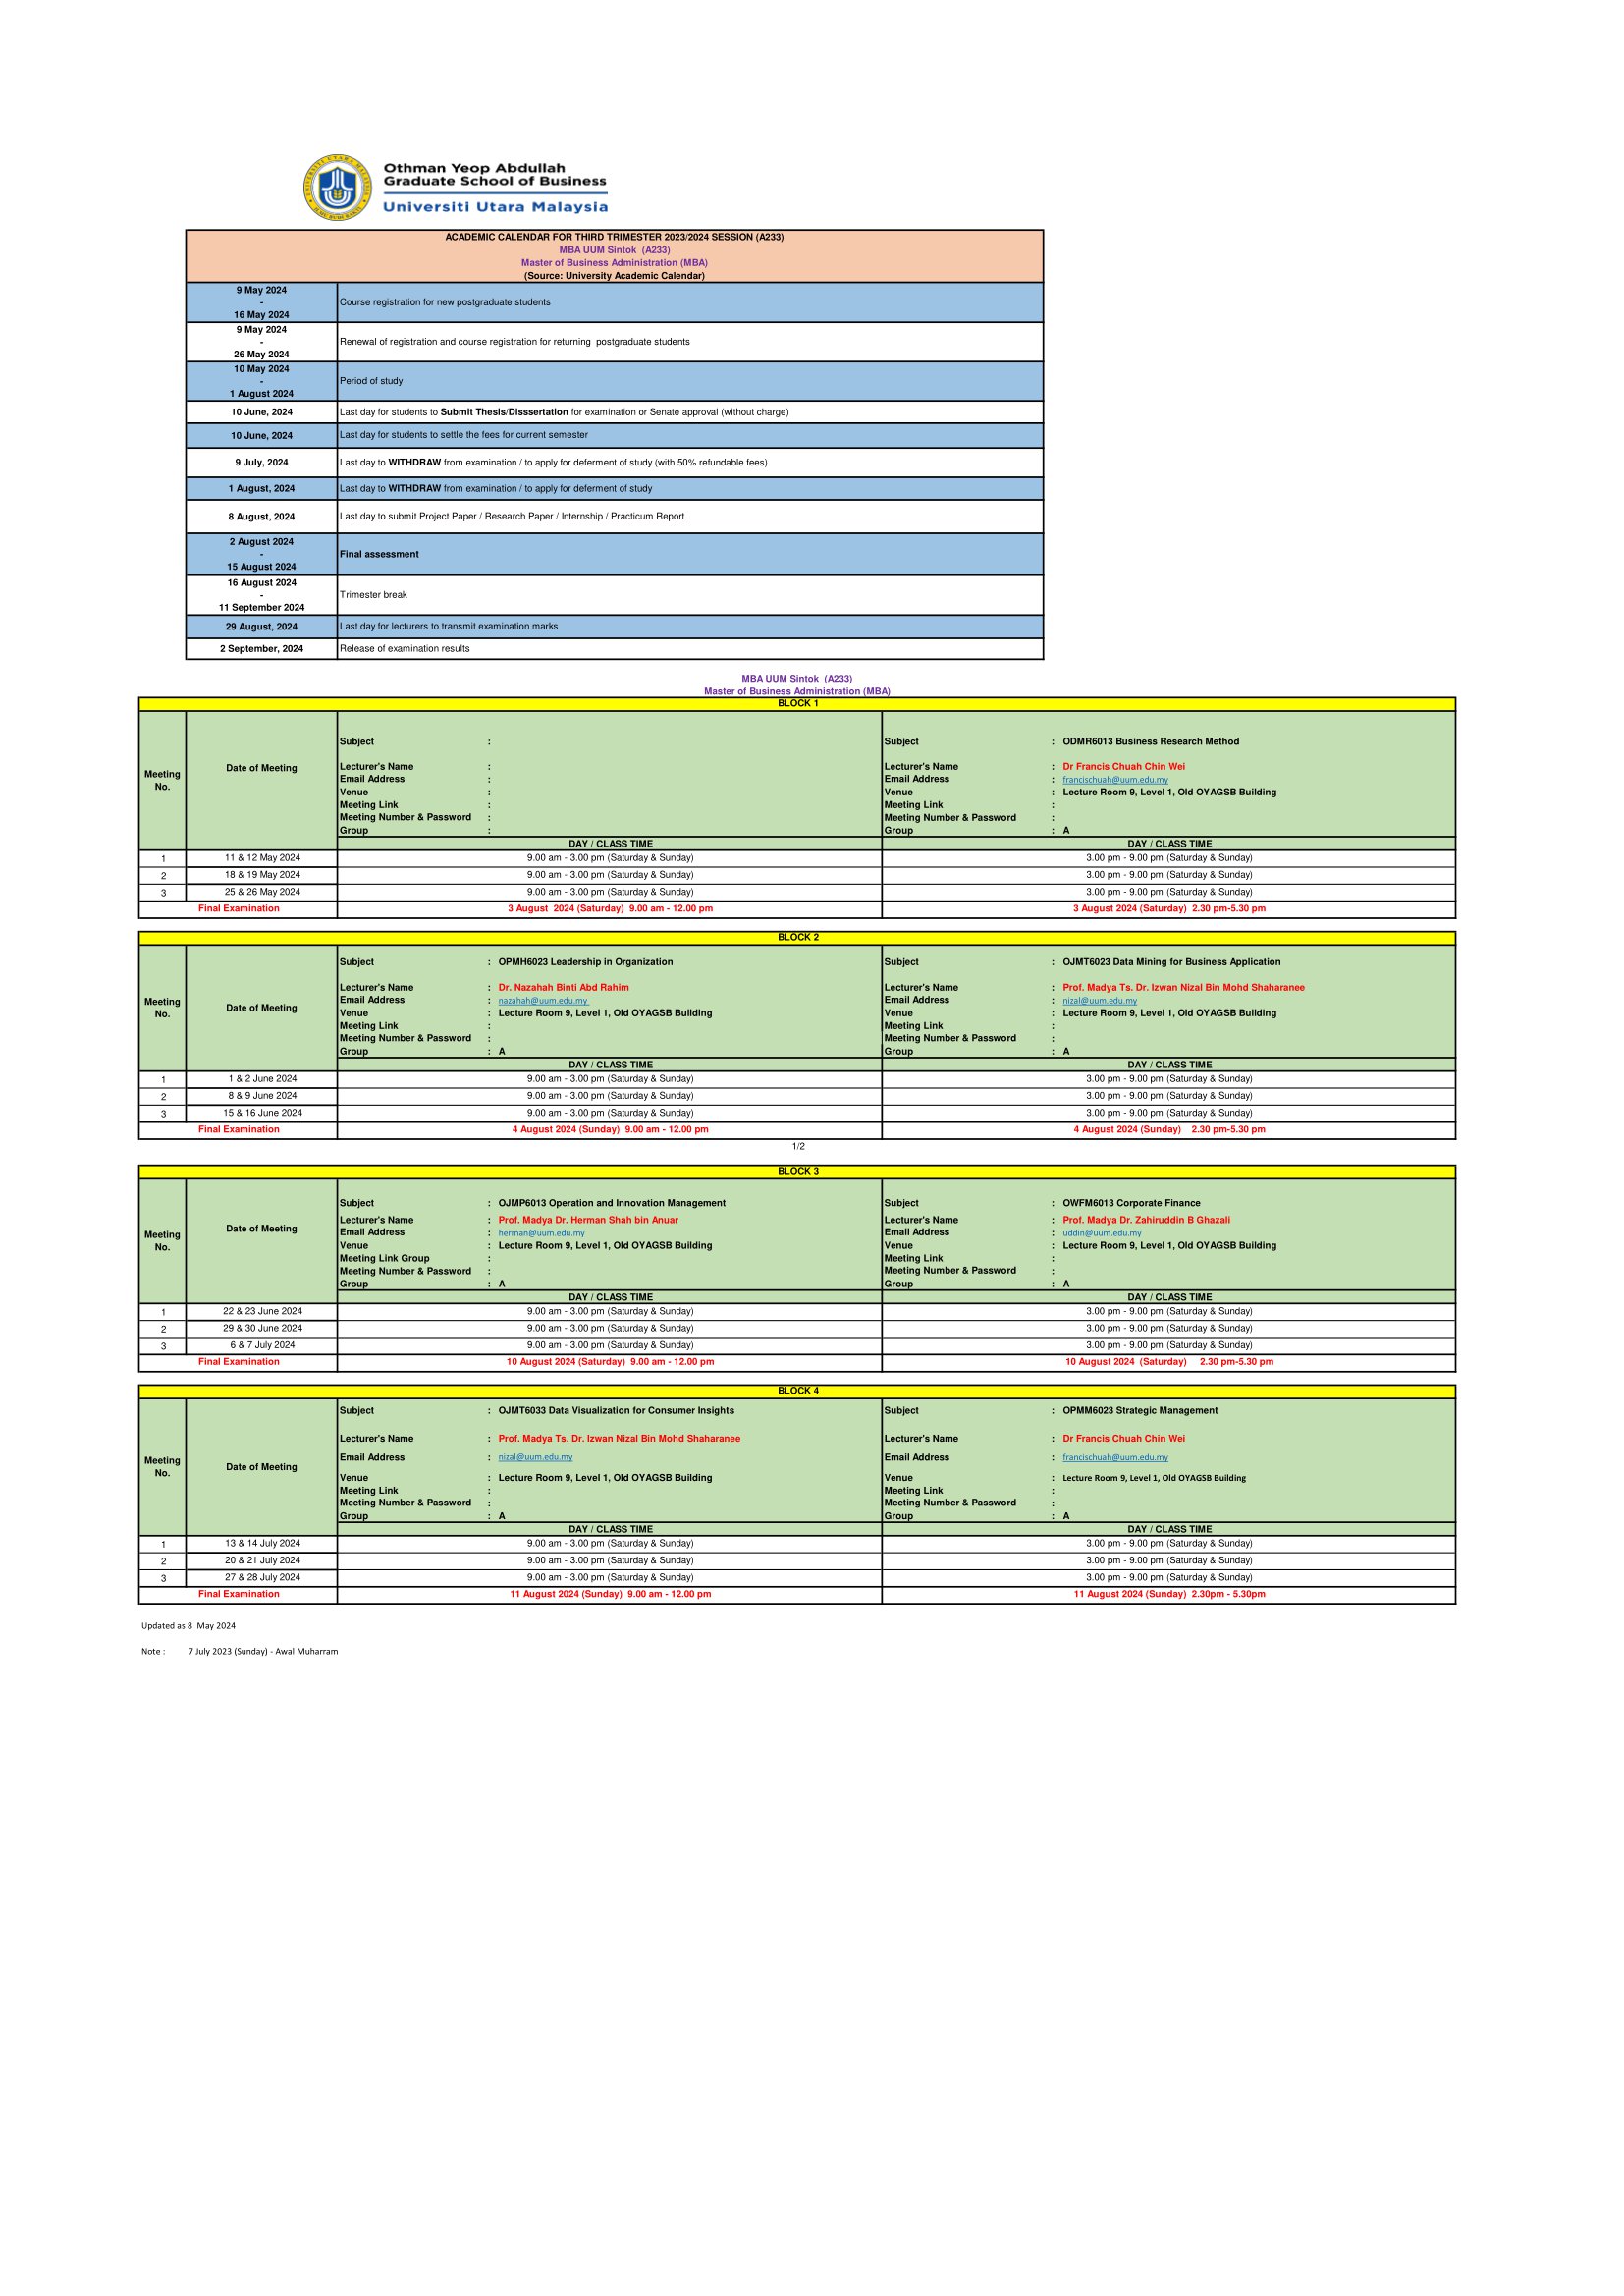 mba-sintok-class-timetable-233-edited